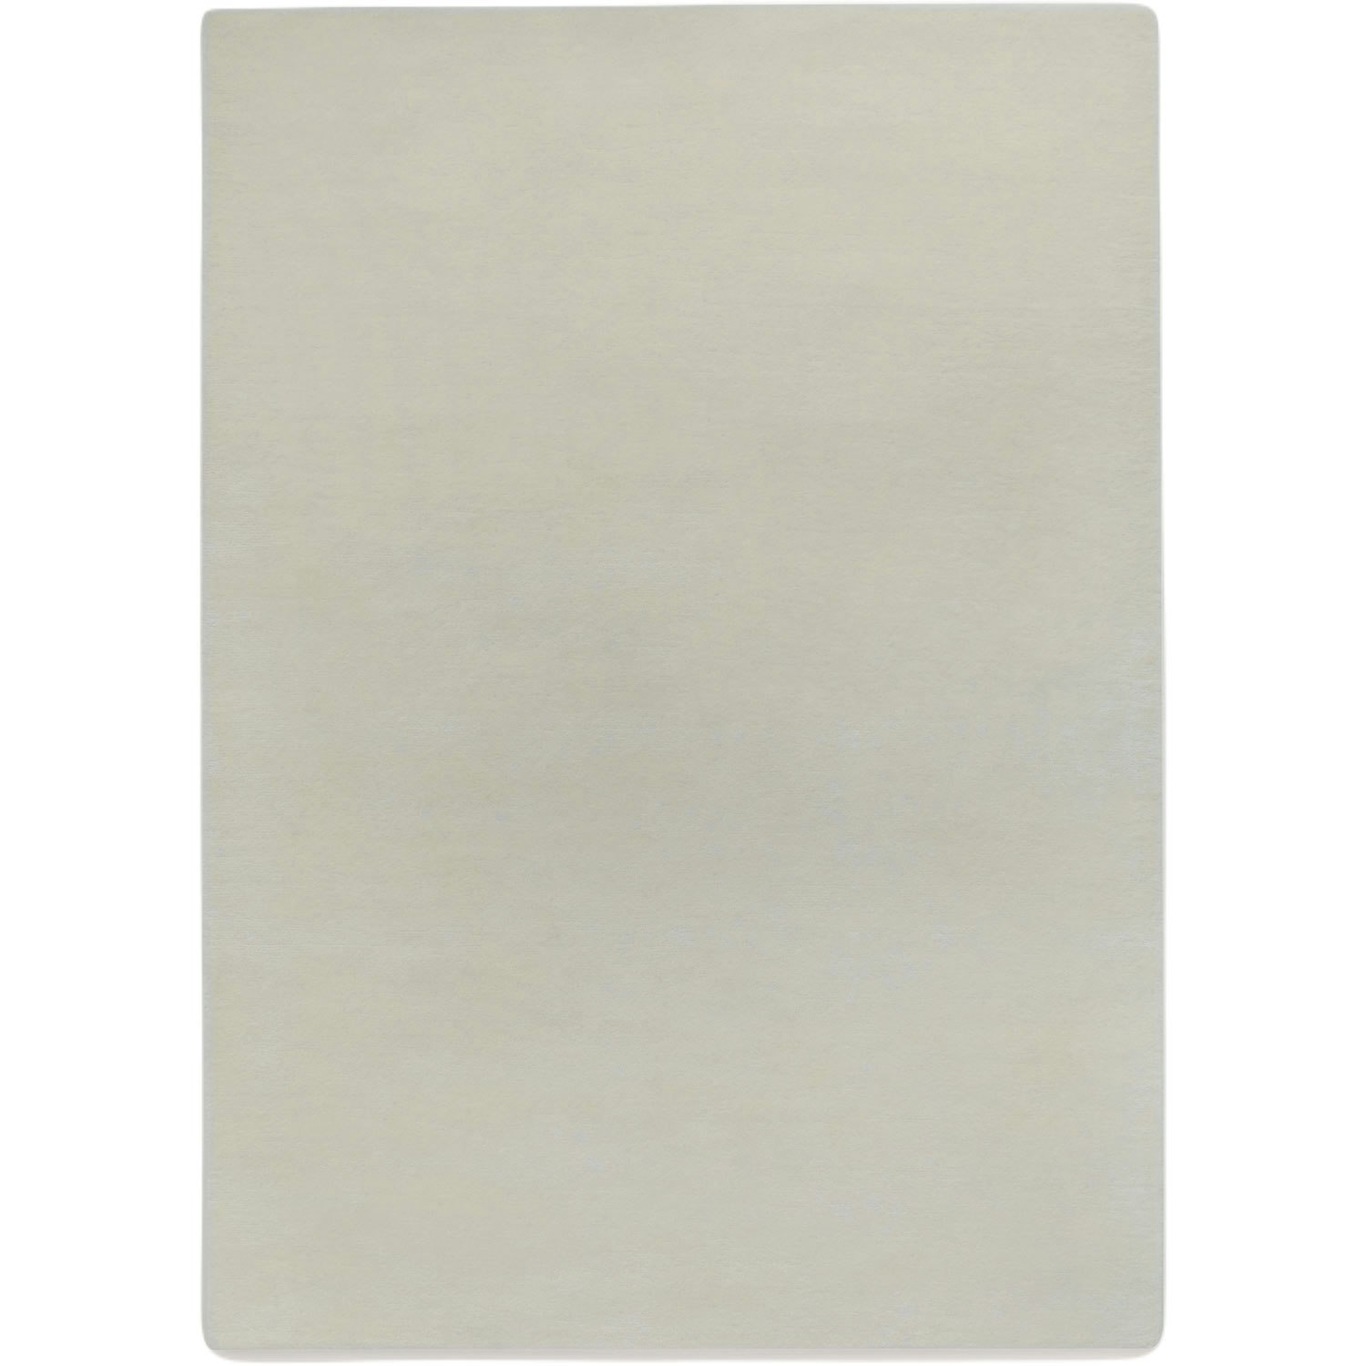 Liljehok Wool Rug Off-white, 250x350 cm